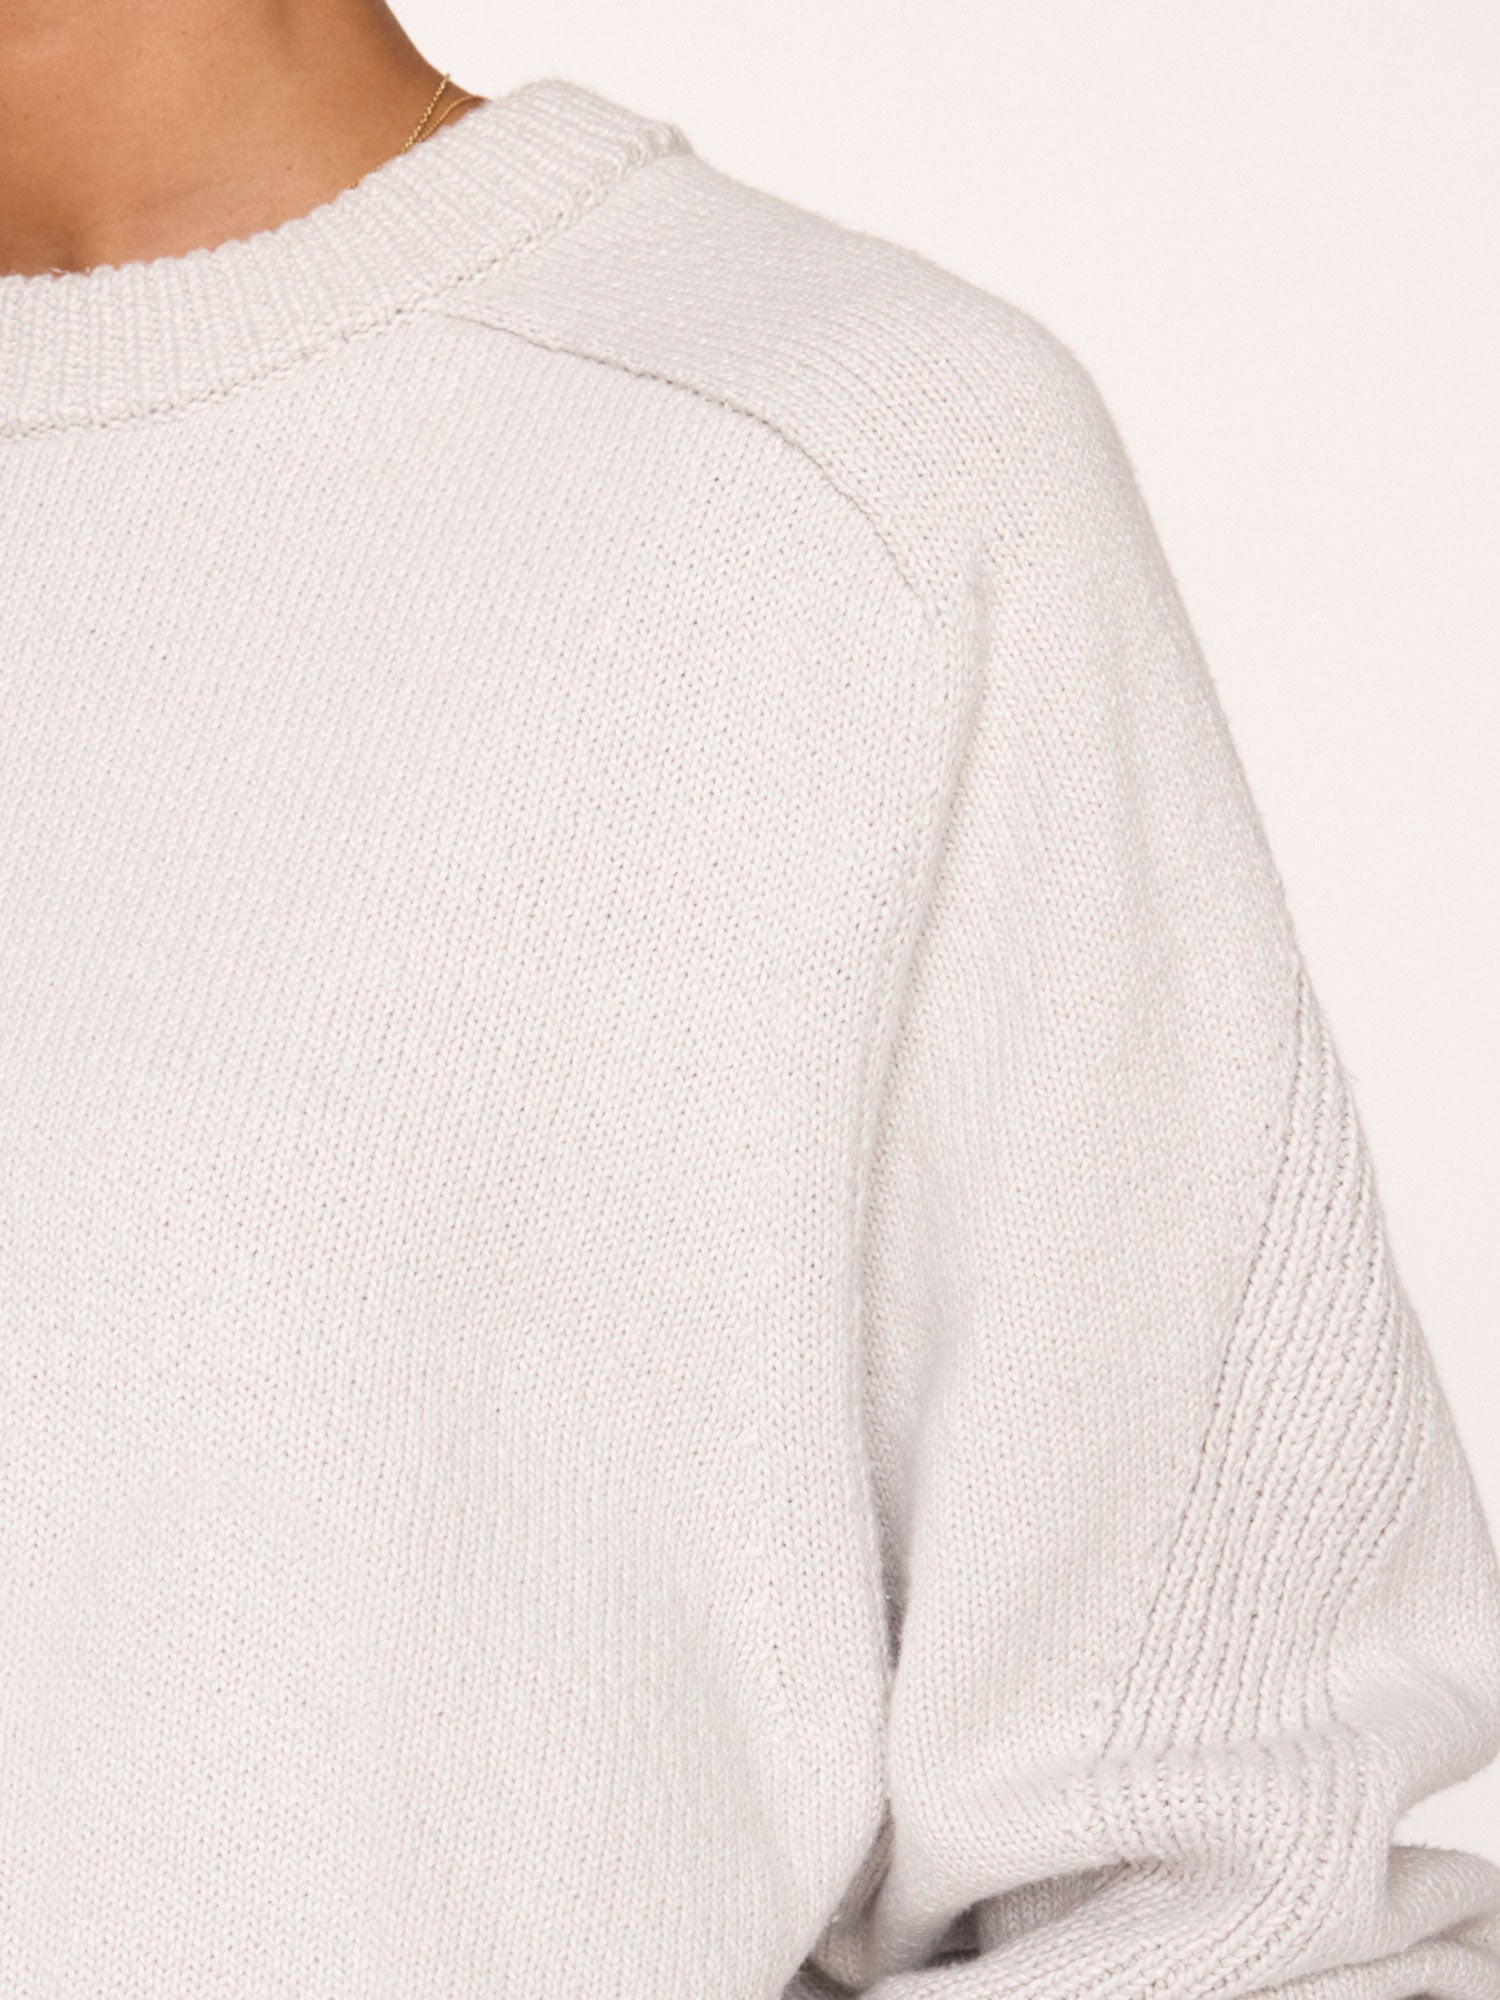 Pele grey crewneck sweater close up